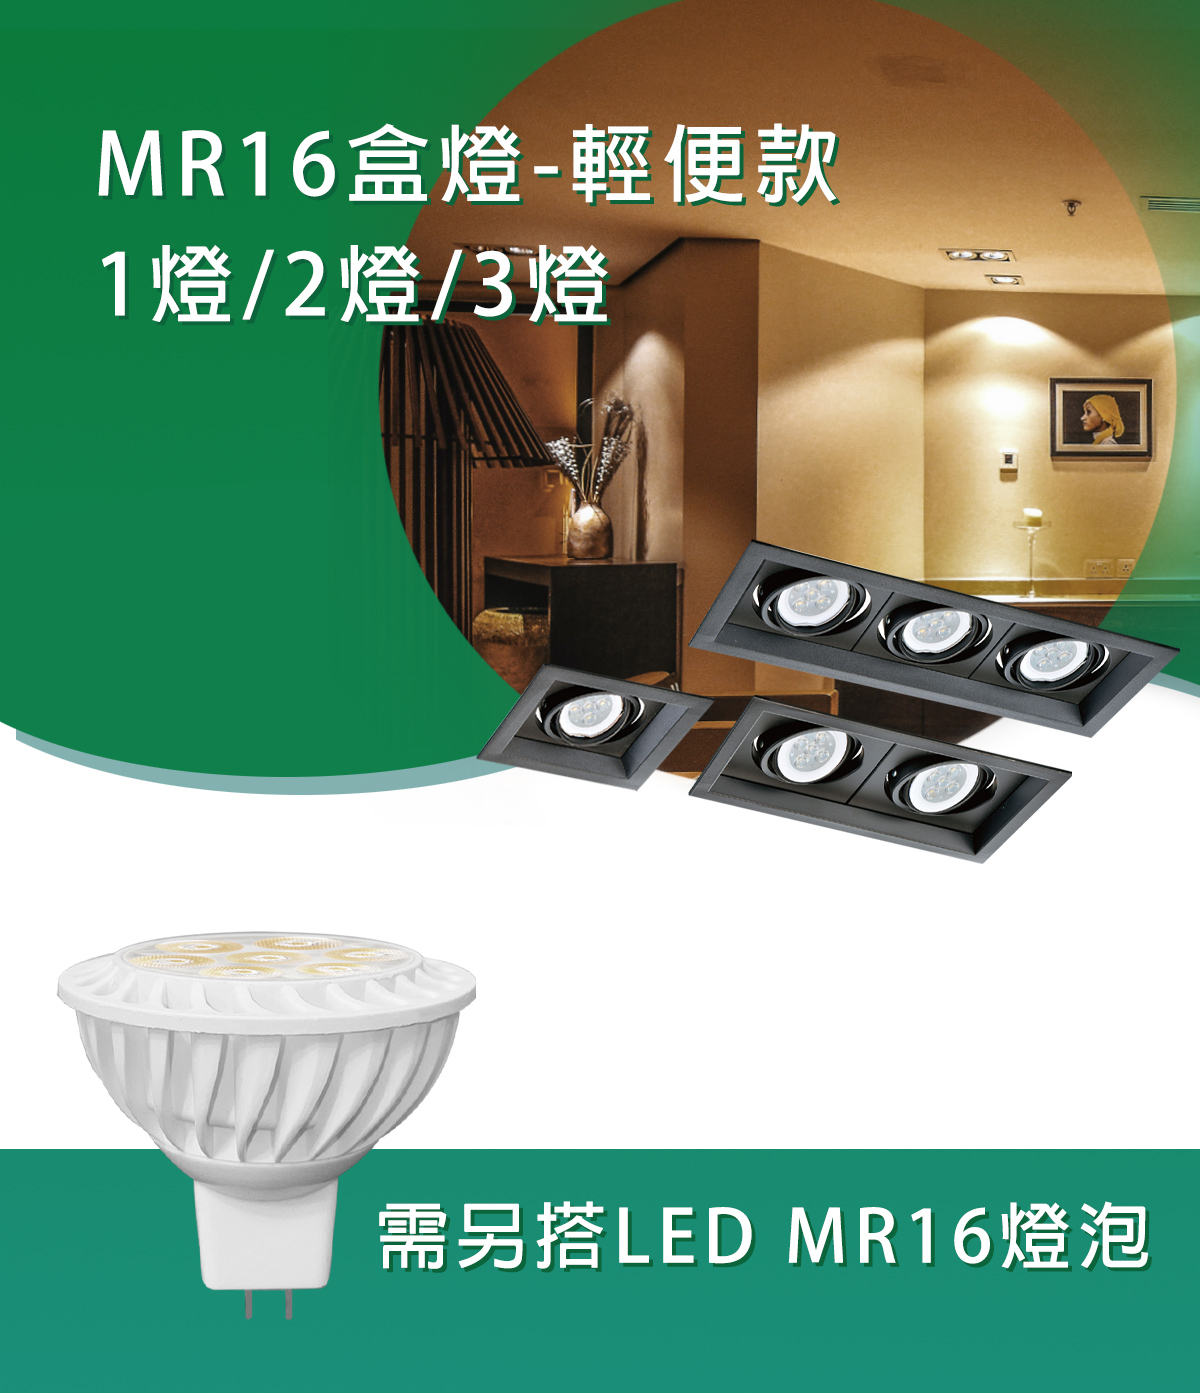 【KAO'S】LED MR16輕便型盒燈 1燈 2燈 3燈 MR16光源另計